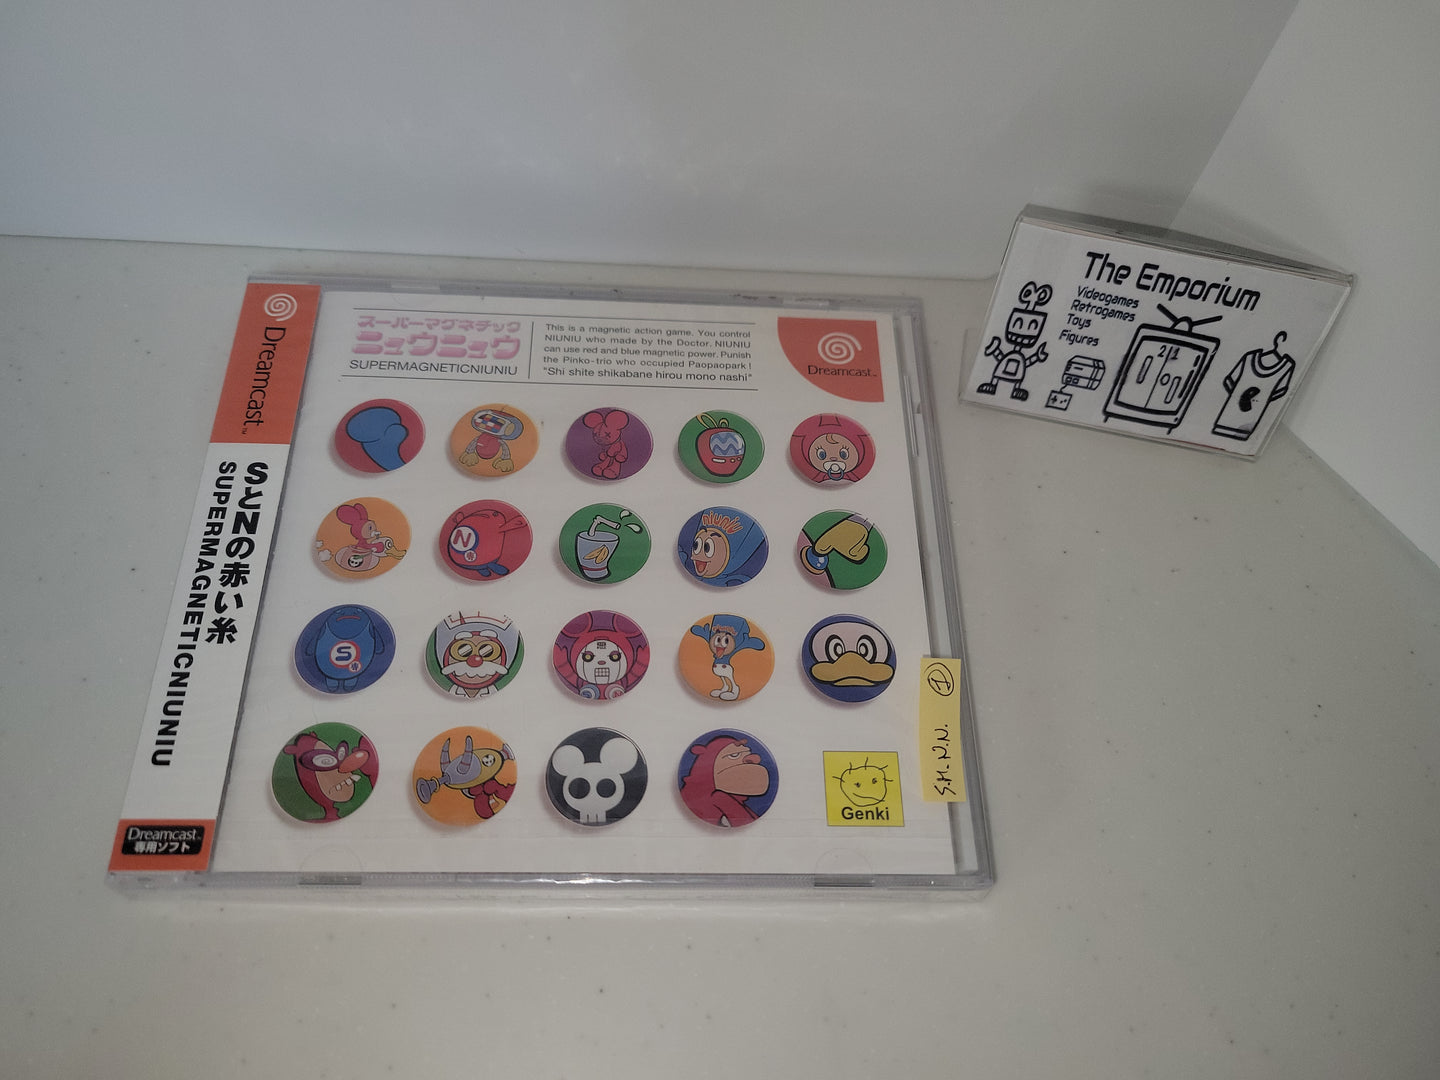 Super Magnetic Niuniu - Sega dc Dreamcast